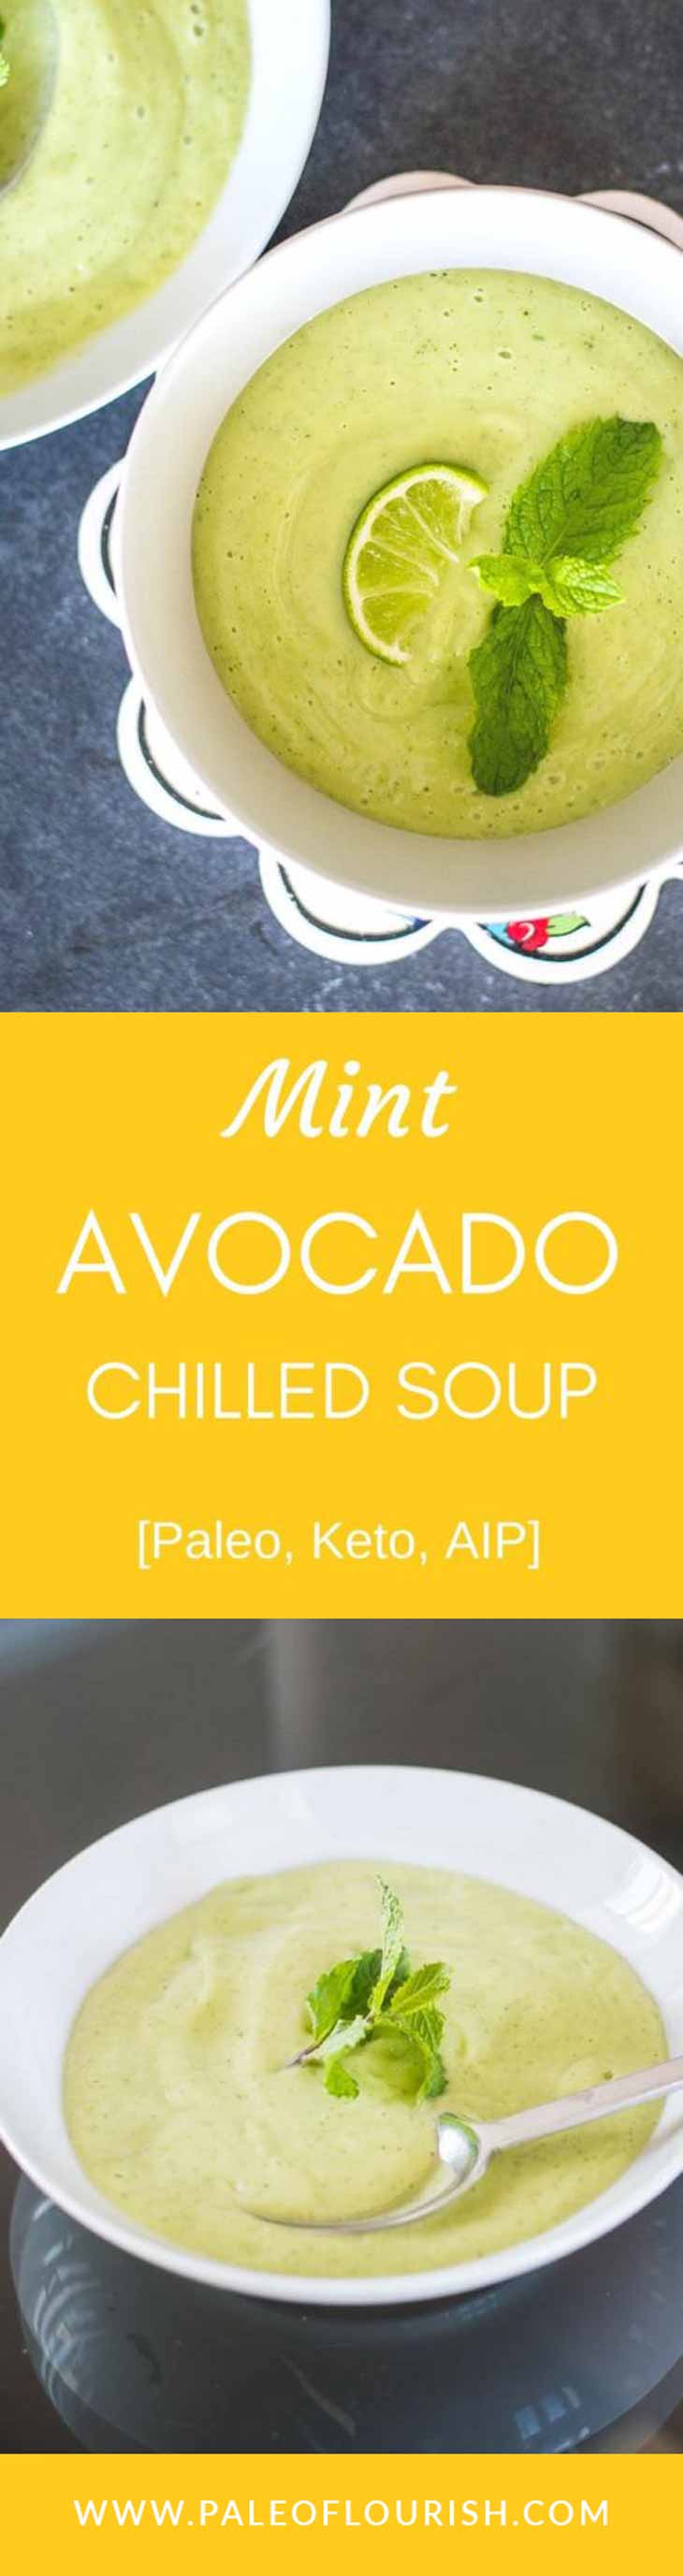 No-Cook Refreshing Mint Avocado Chilled Soup [Paleo, Keto, AIP] #paleo #keto #aip #recipes -  https://paleoflourish.com/mint-avocado-chilled-soup